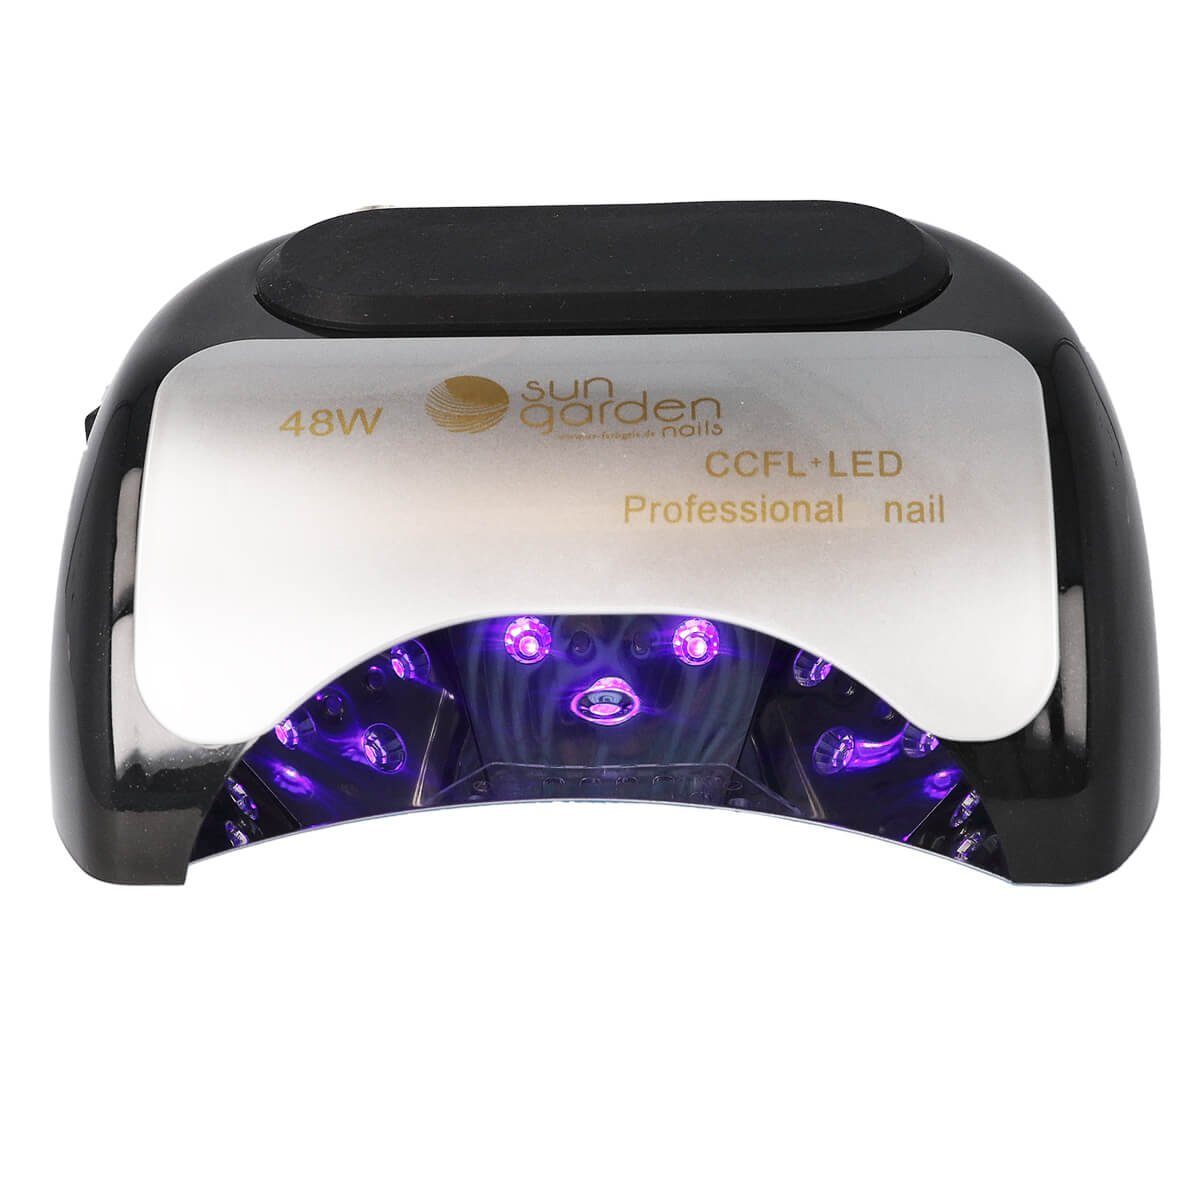 Sun Garden Nails Lichthärtungsgerät UV Lampe K18 schwarz 48W CCFL-LED, UV-Gerät, Dual LED Gerät mit Timer